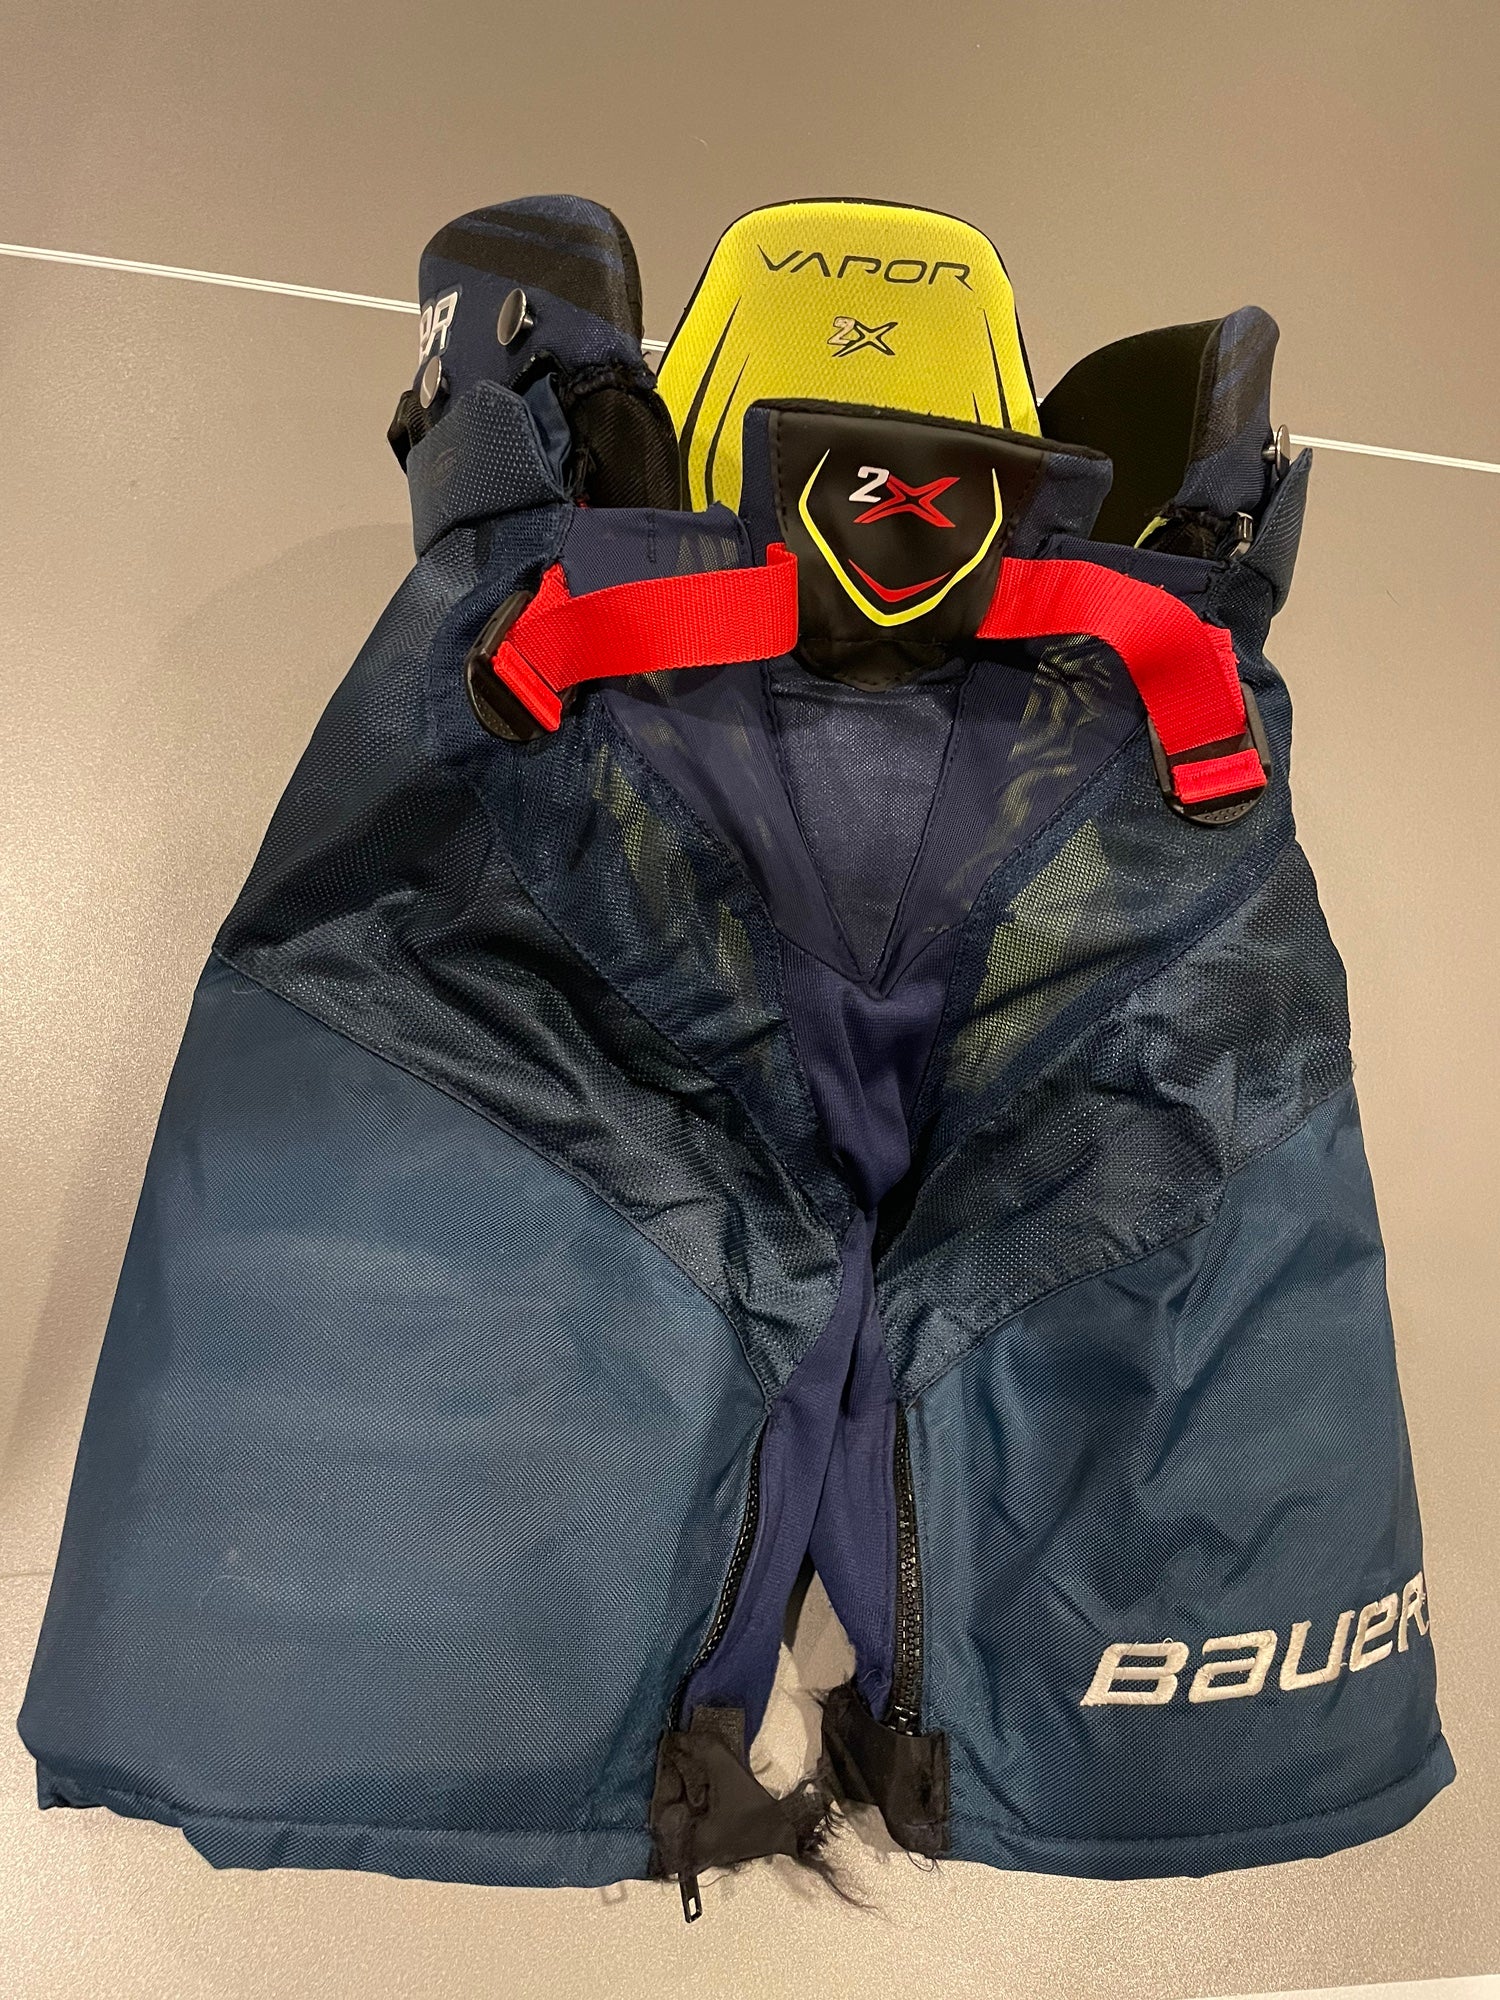 Bauer Vapor 2X Junior Ice Hockey Pant